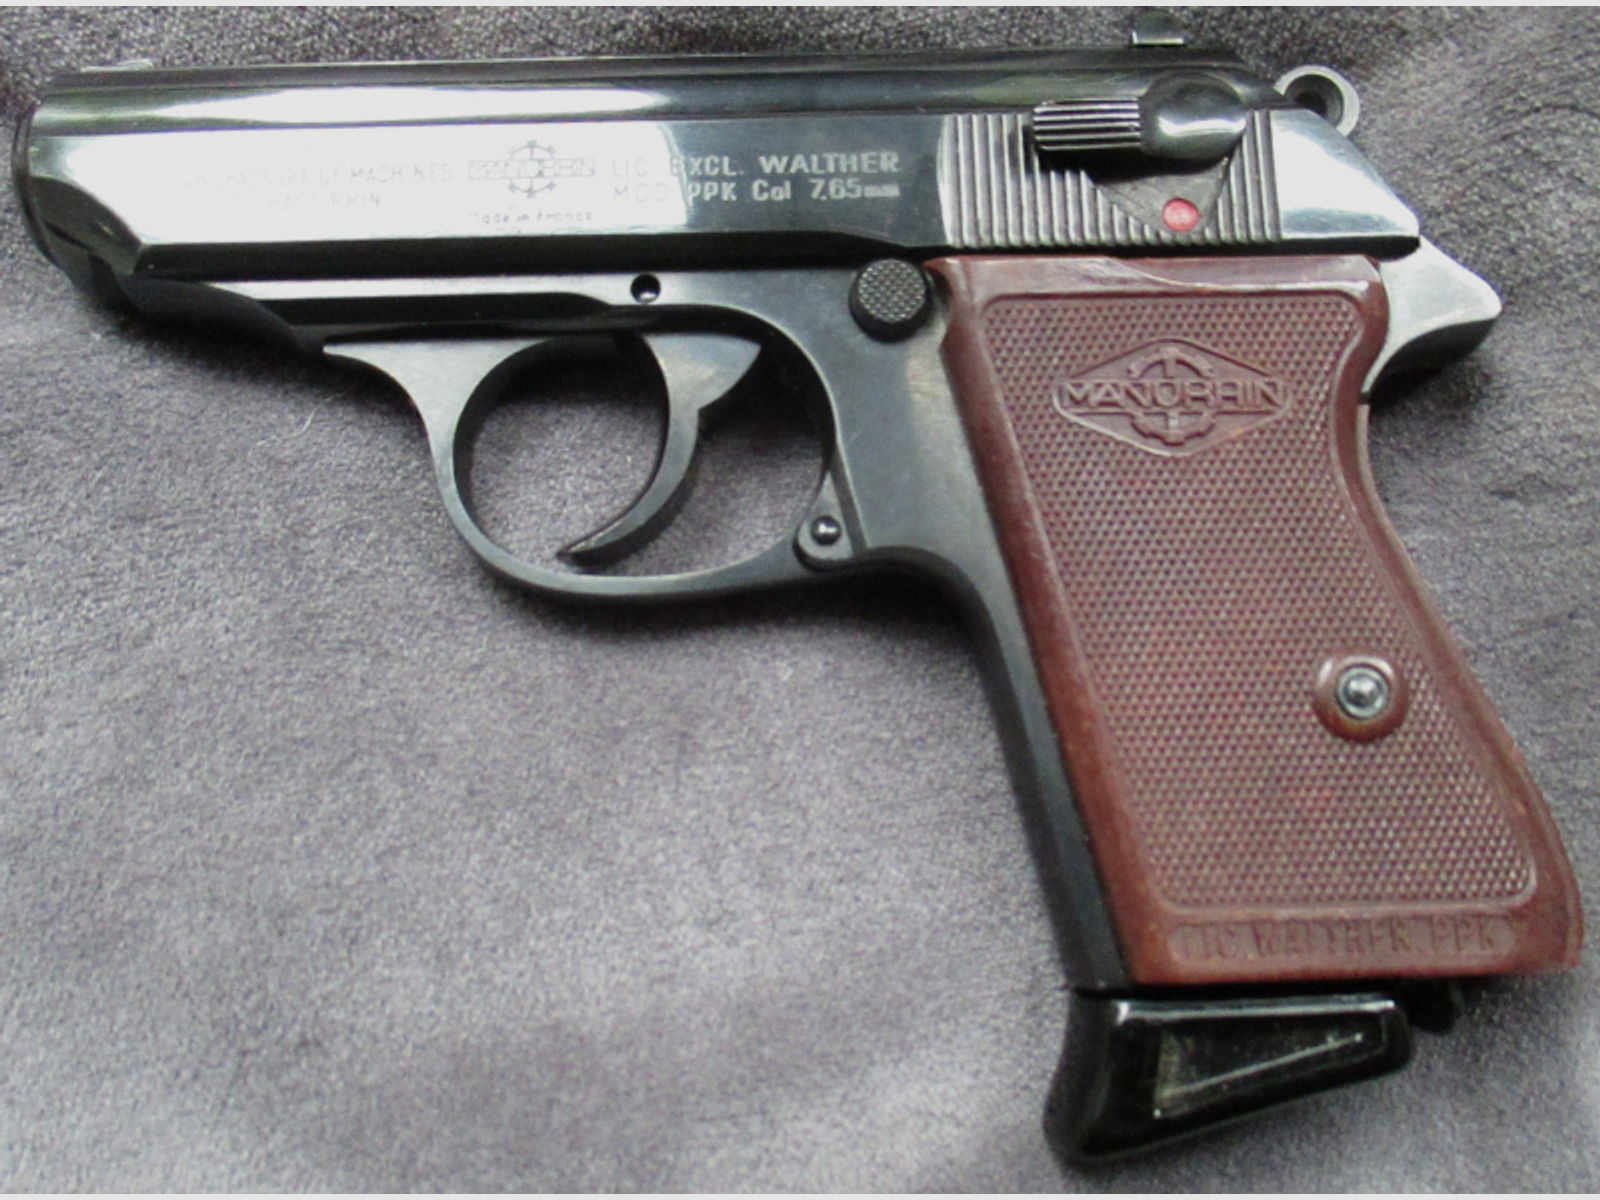 Selbstladepistole Walther Modell PPK von Manurhin Kaliber 7,65 Browning